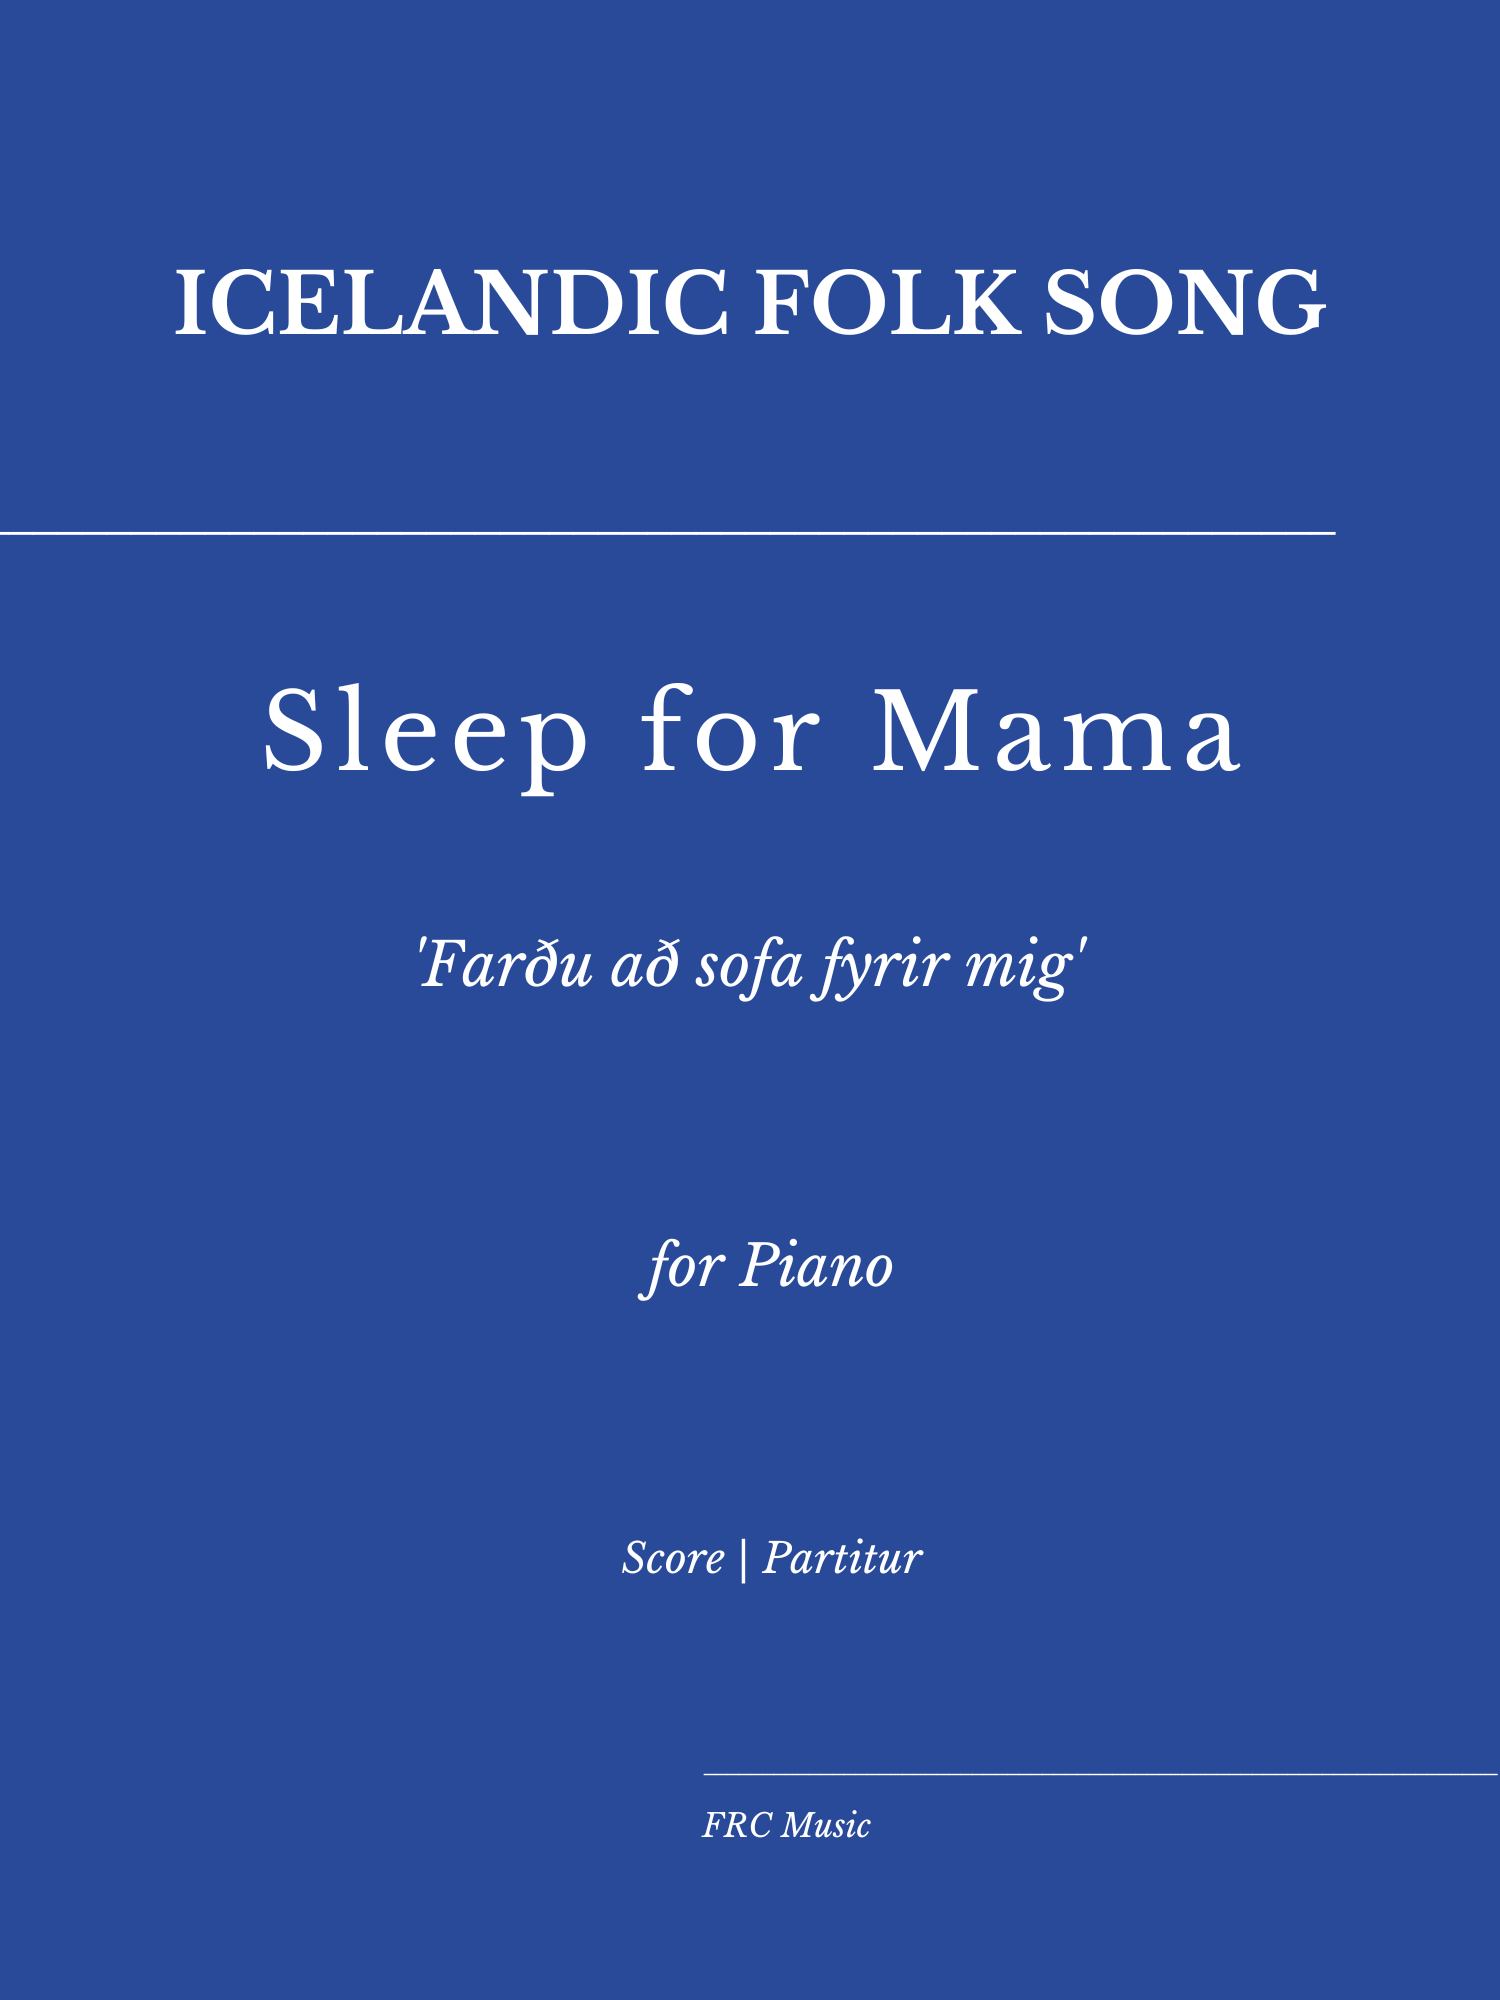 Sleep for Mama Icelandic Folk Song